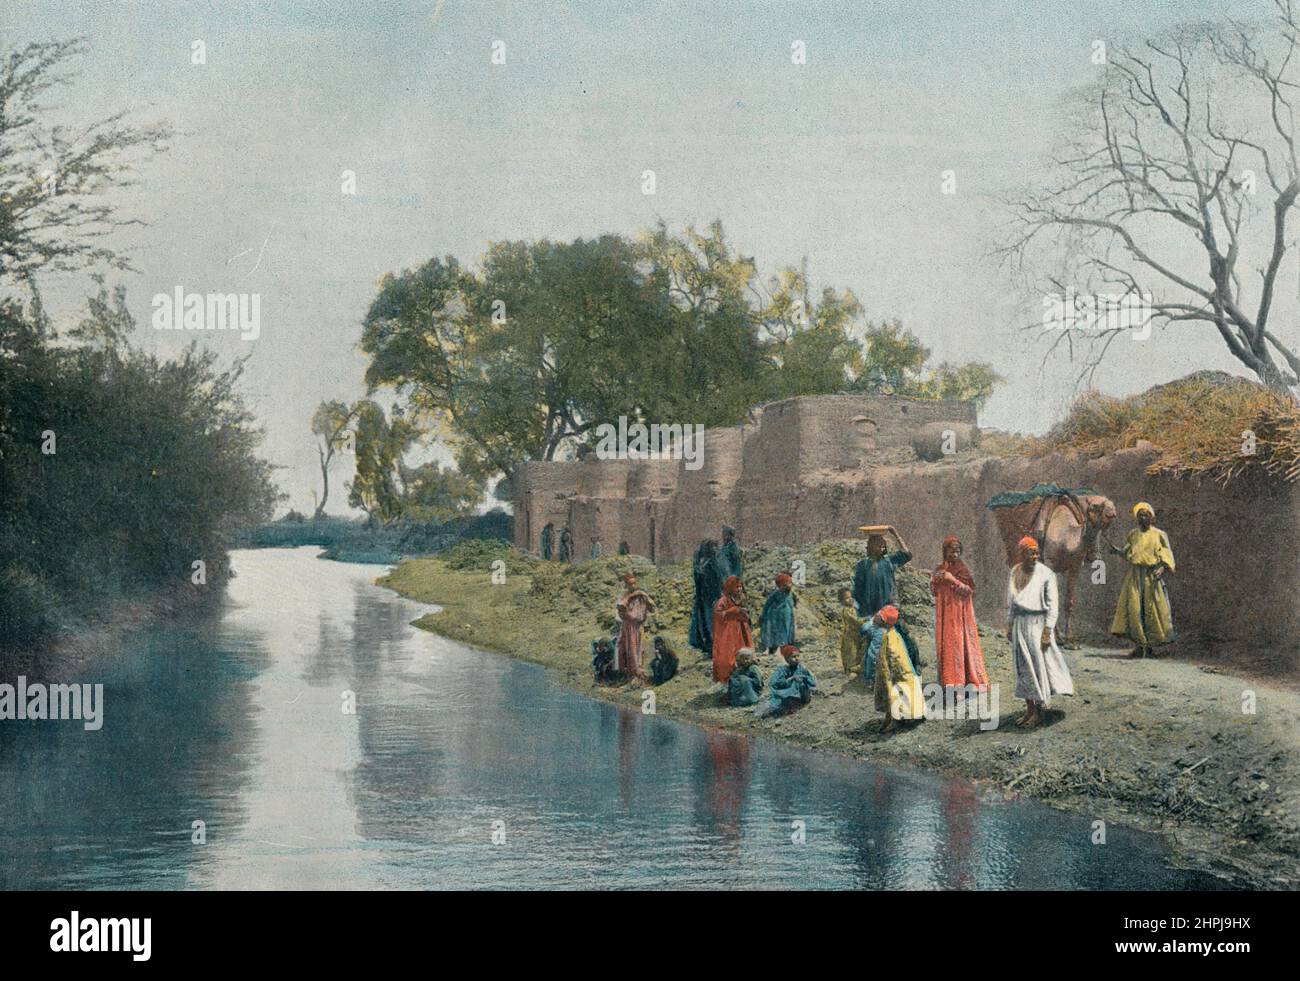 DORF ARABE. Autour Du Monde Egypte Paysages Monuments 1895 - 1900 (5) - 19. Jahrhundert französisch kolorierte Fotografie-Druck Stockfoto